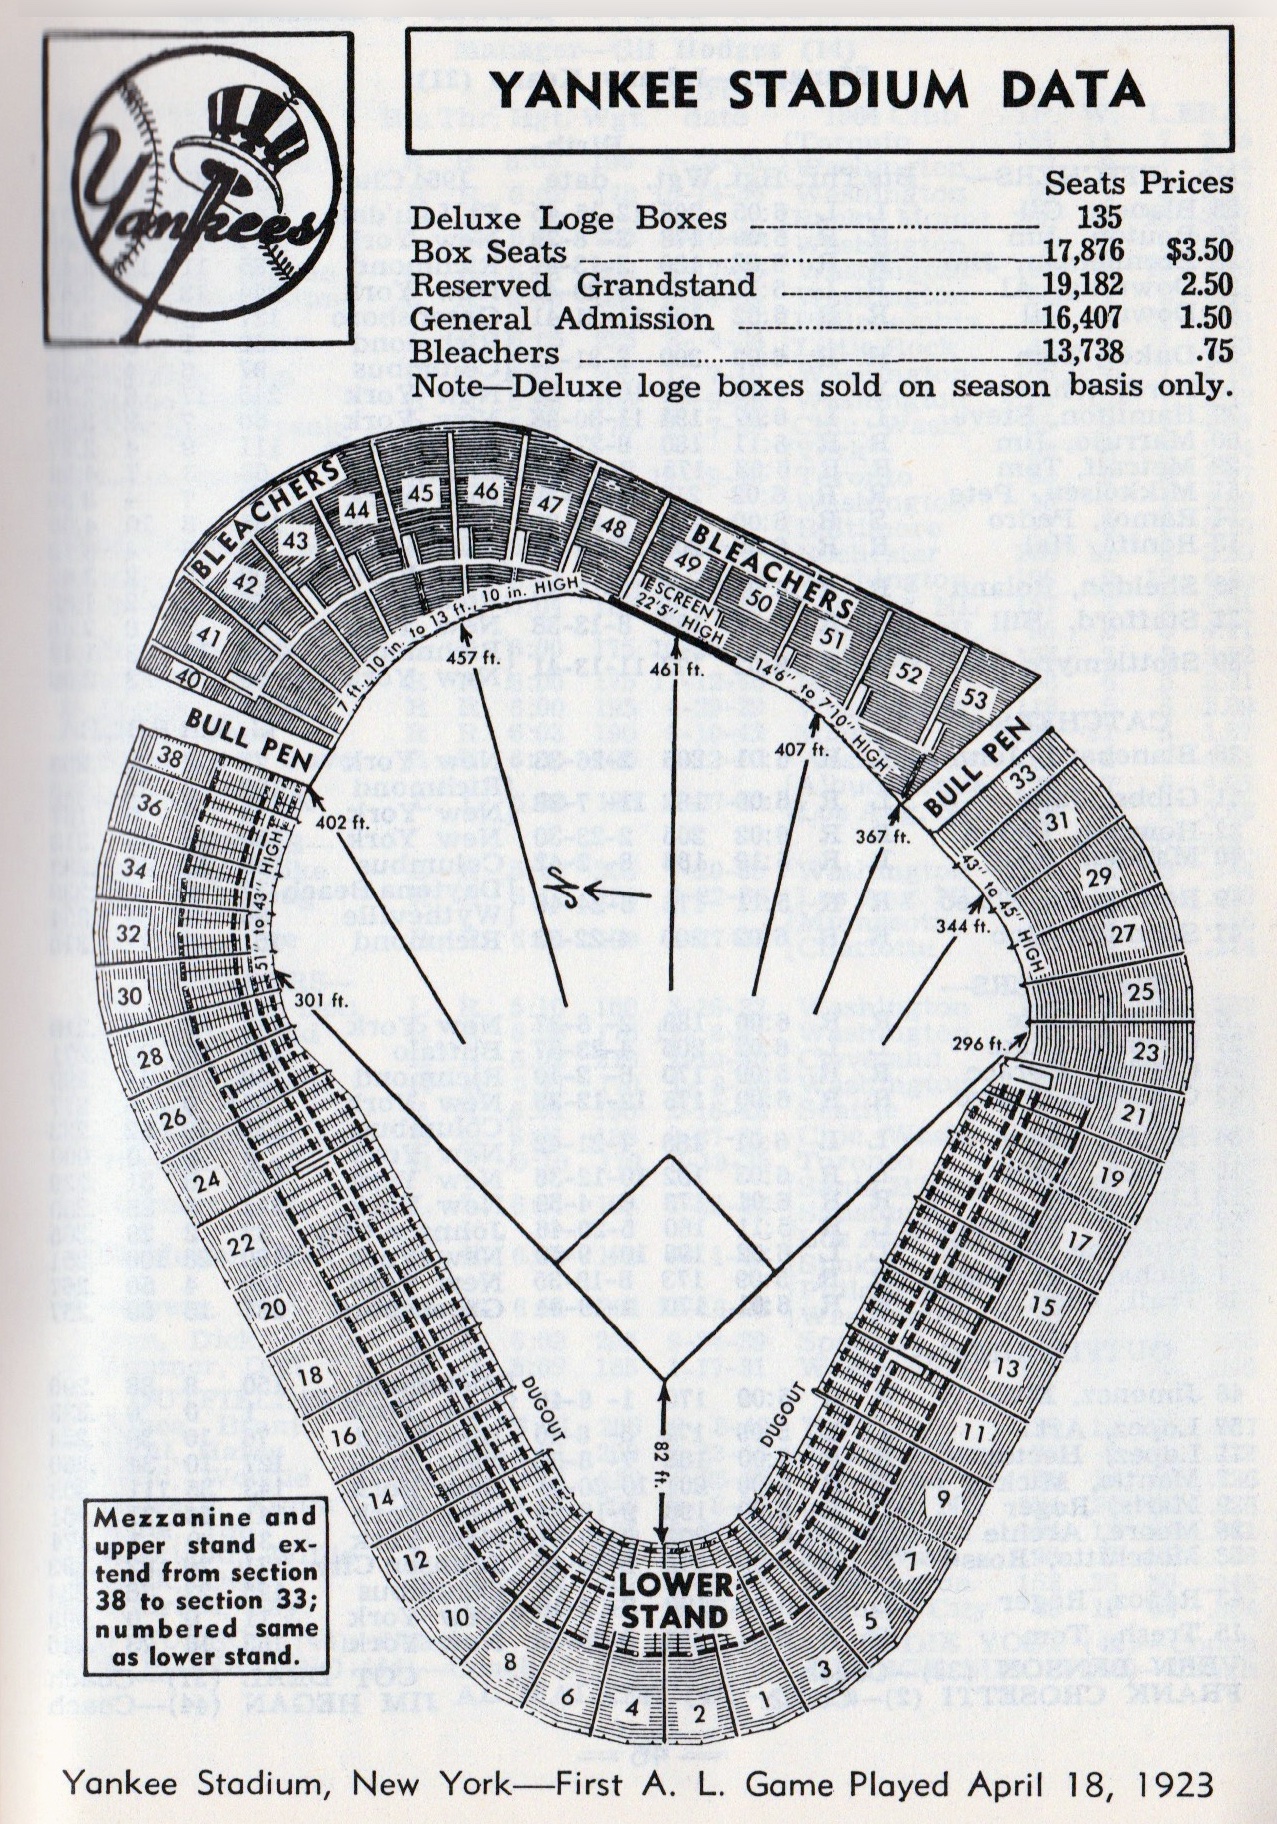 Todd Radom on X: A very satisfying diagram of old Yankee Stadium